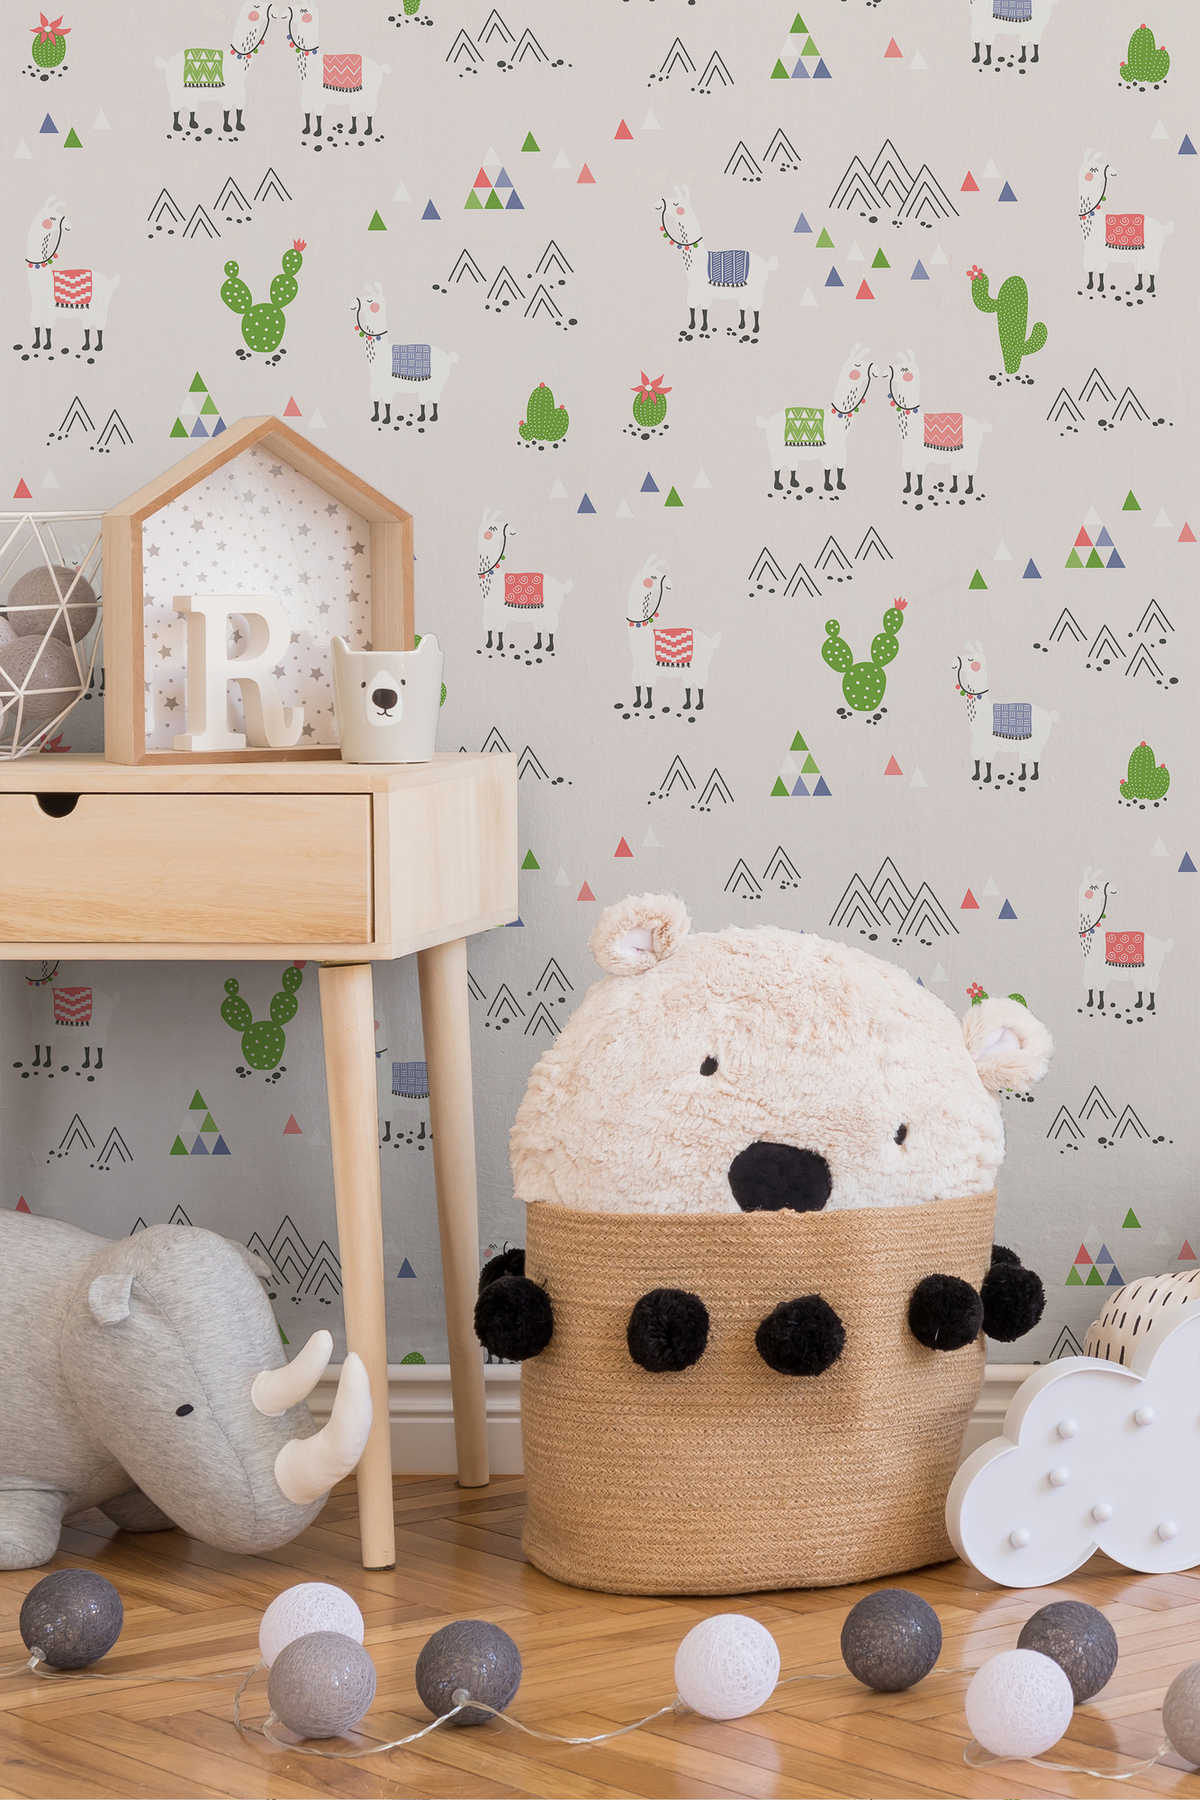             Nursery wallpaper llama colourful pattern & textile look- grey,
        